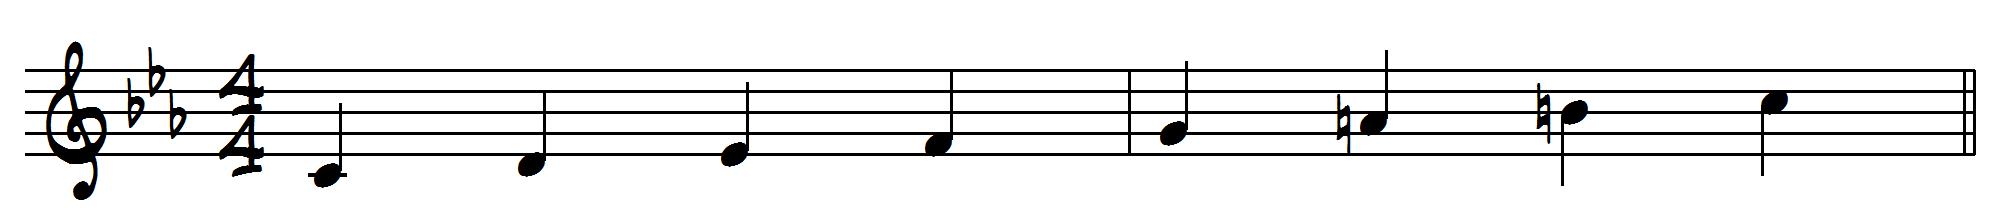 Melodic minor